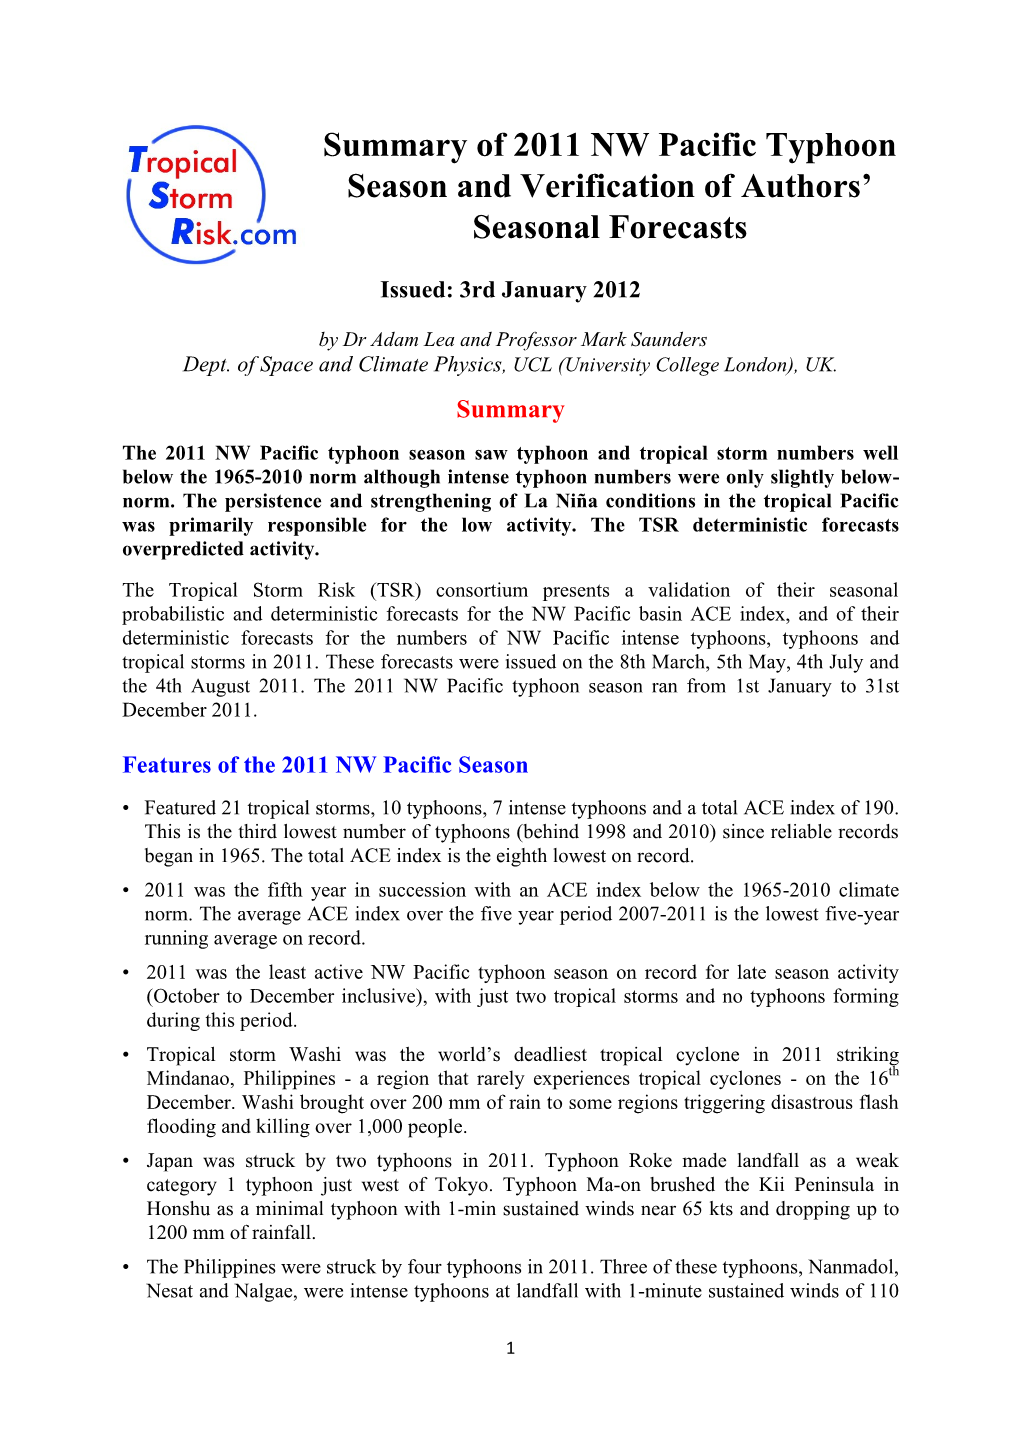 Summary of 2011 NW Pacific Typhoon Season and Verification of Authors’ Seasonal Forecasts